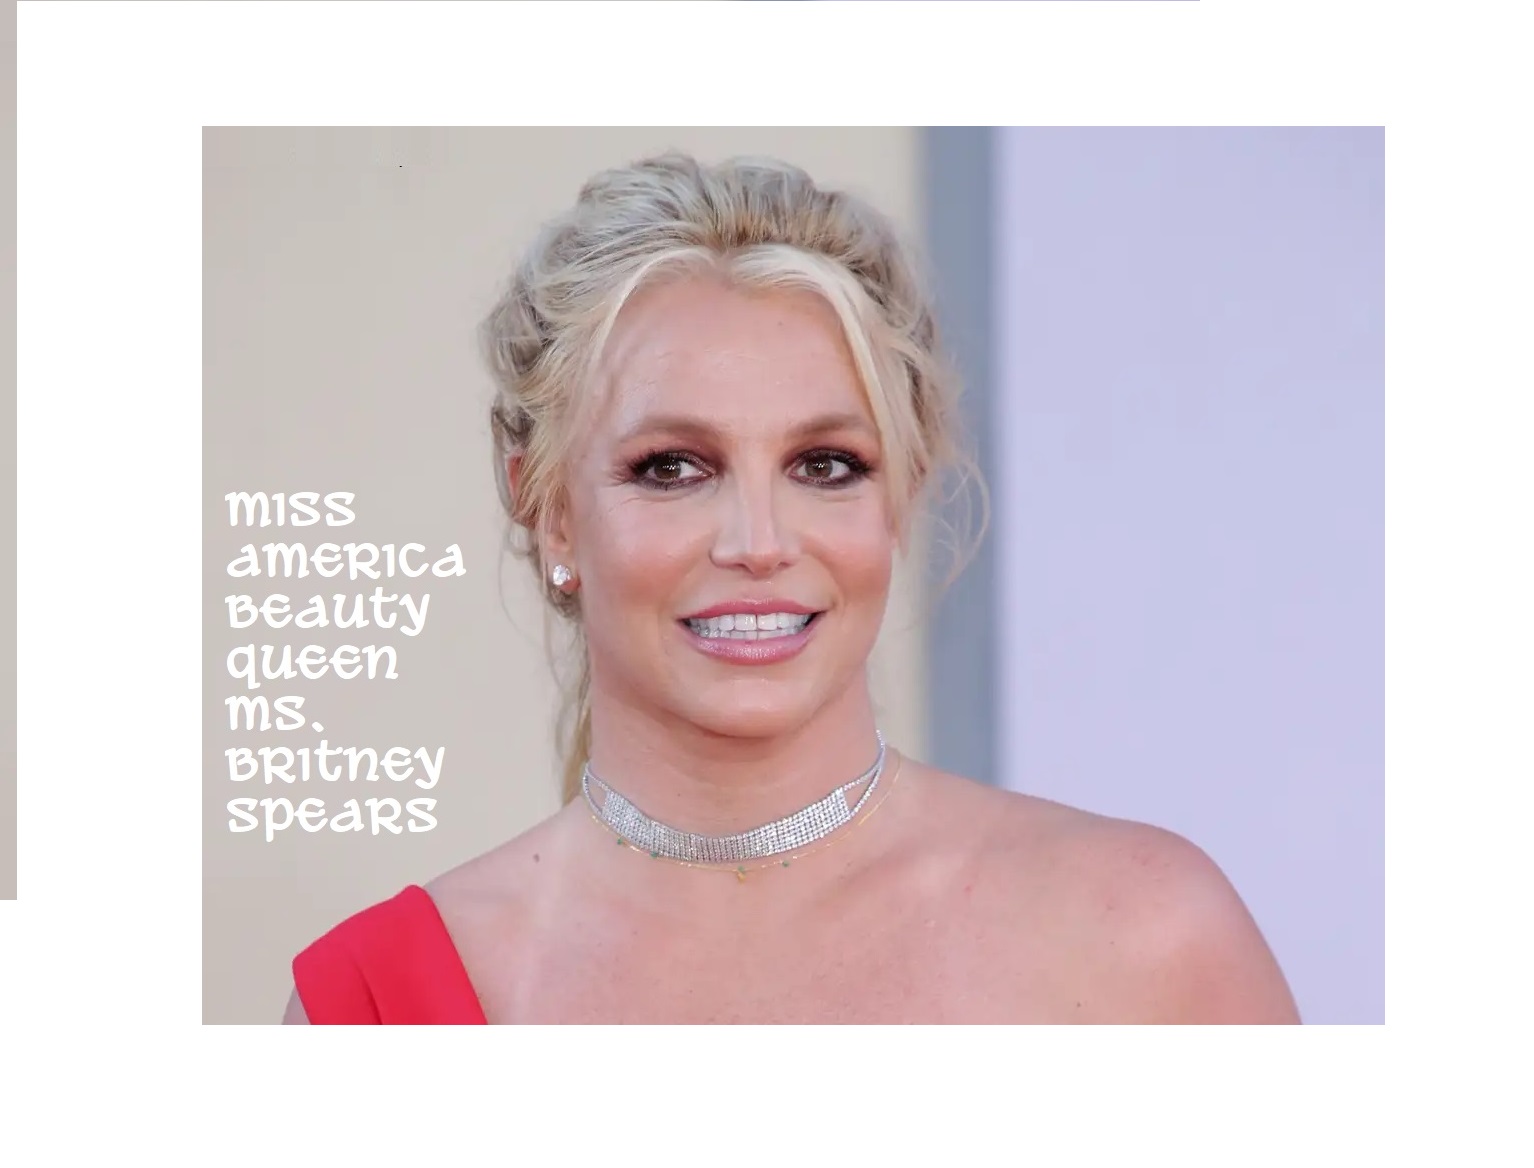 Ms. Britney Spears